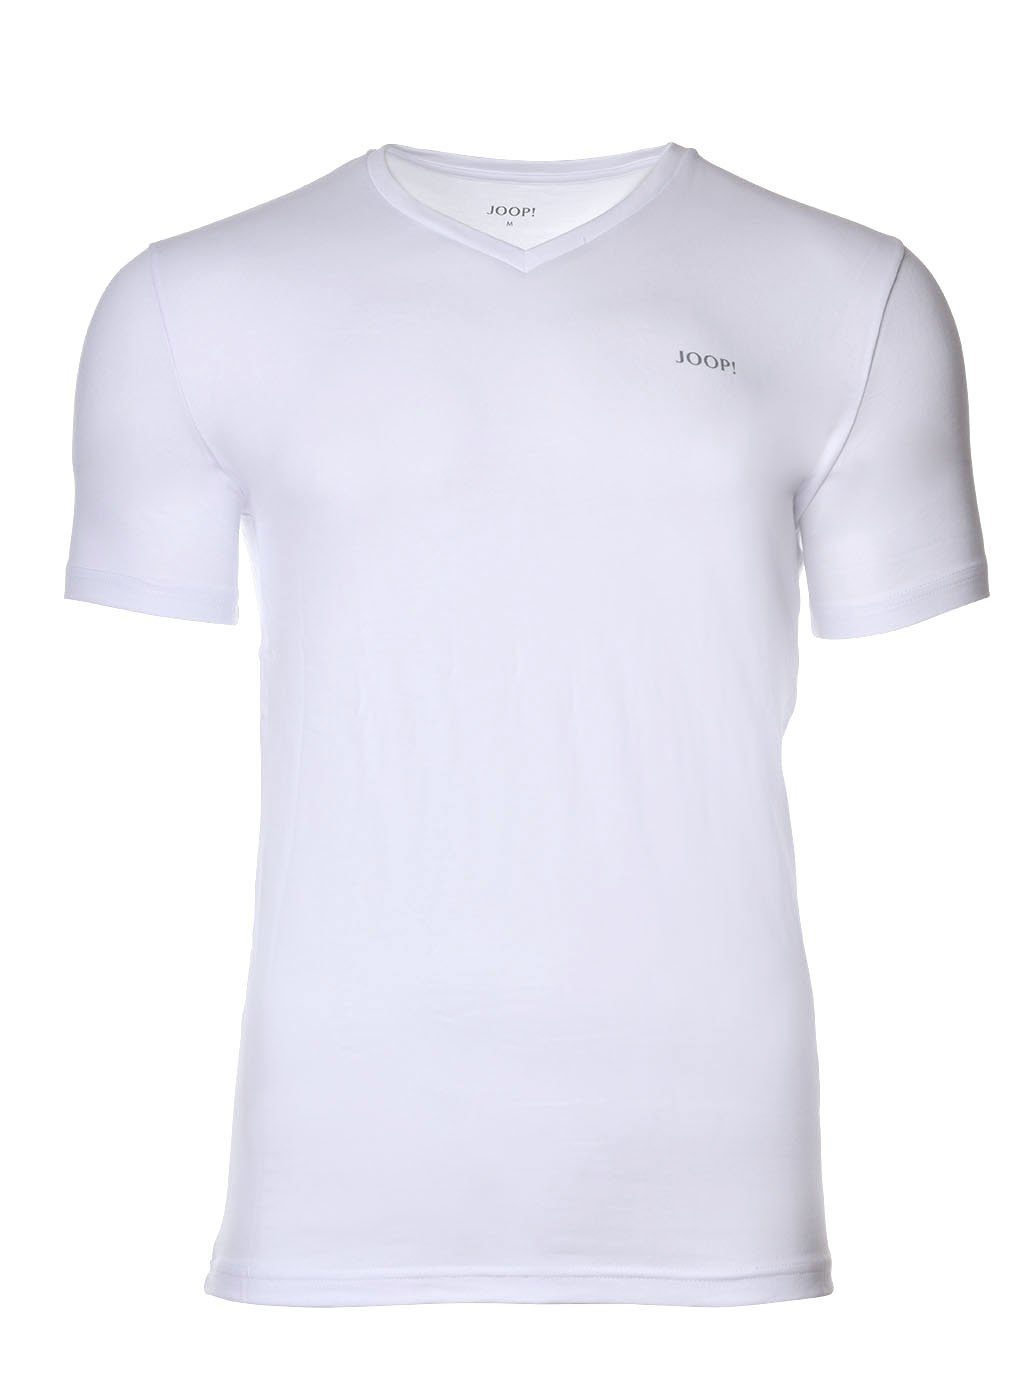 Joop! T-Shirt Herren Unterhemd, - 4er Pack Schwarz/Weiß V-Neck T-Shirt